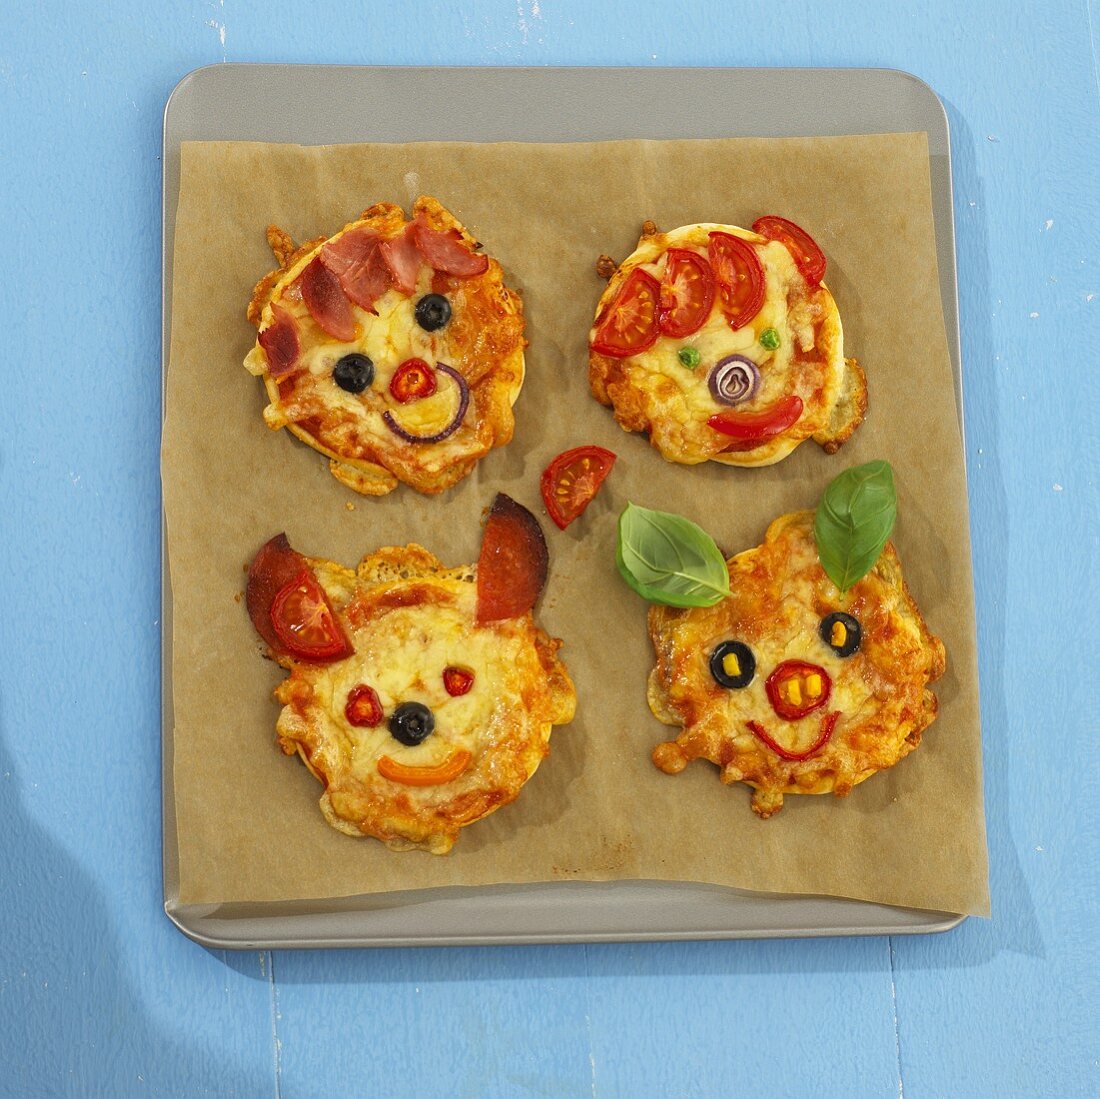 Mini-pizzas with animal faces